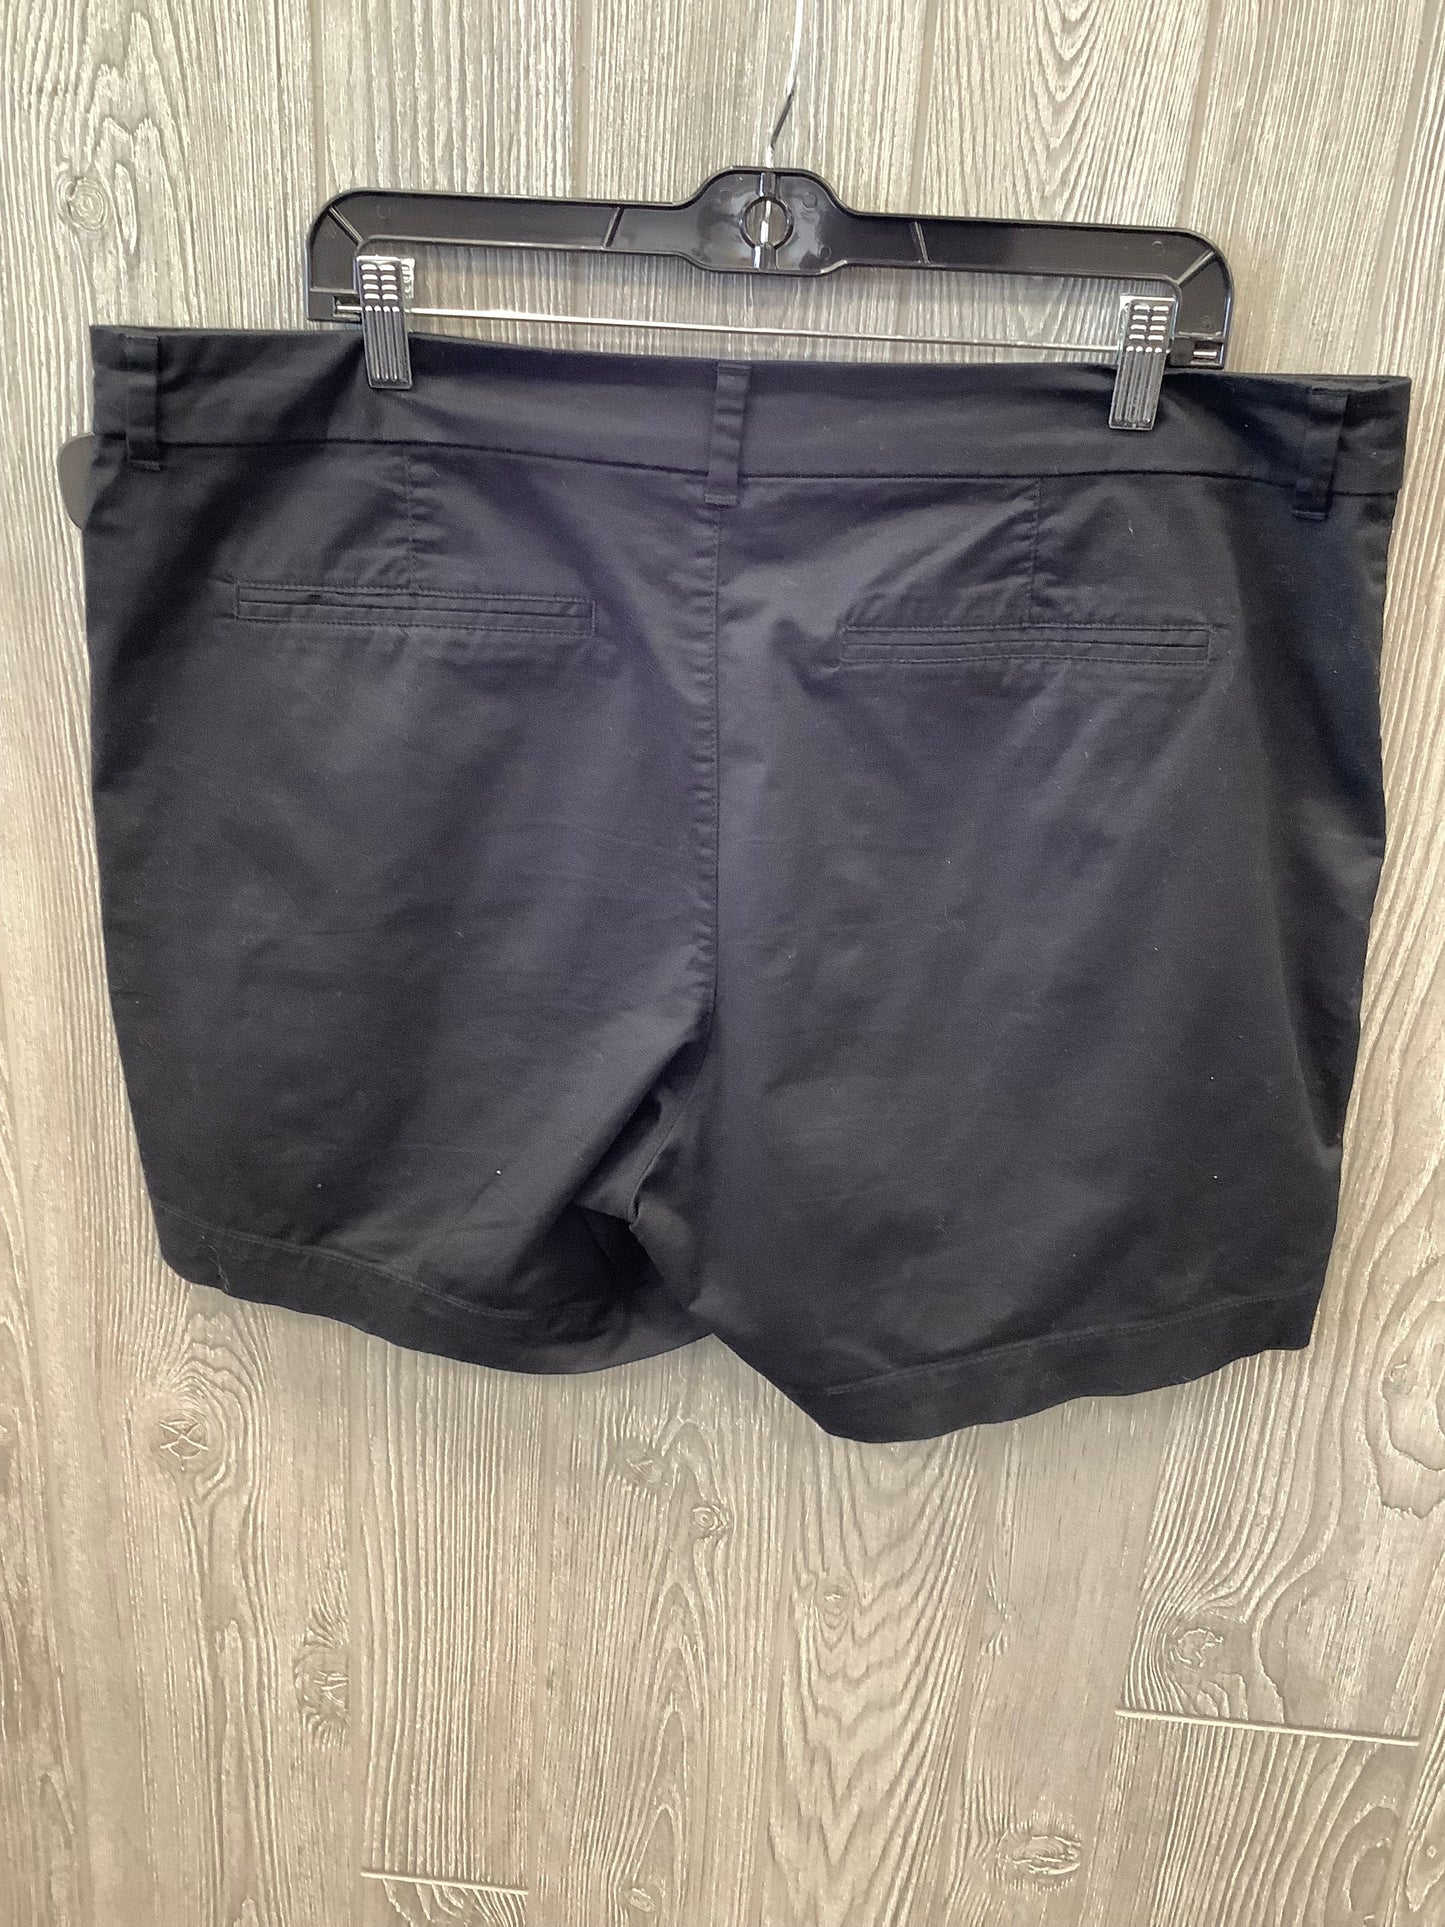 Black Shorts Old Navy, Size 16